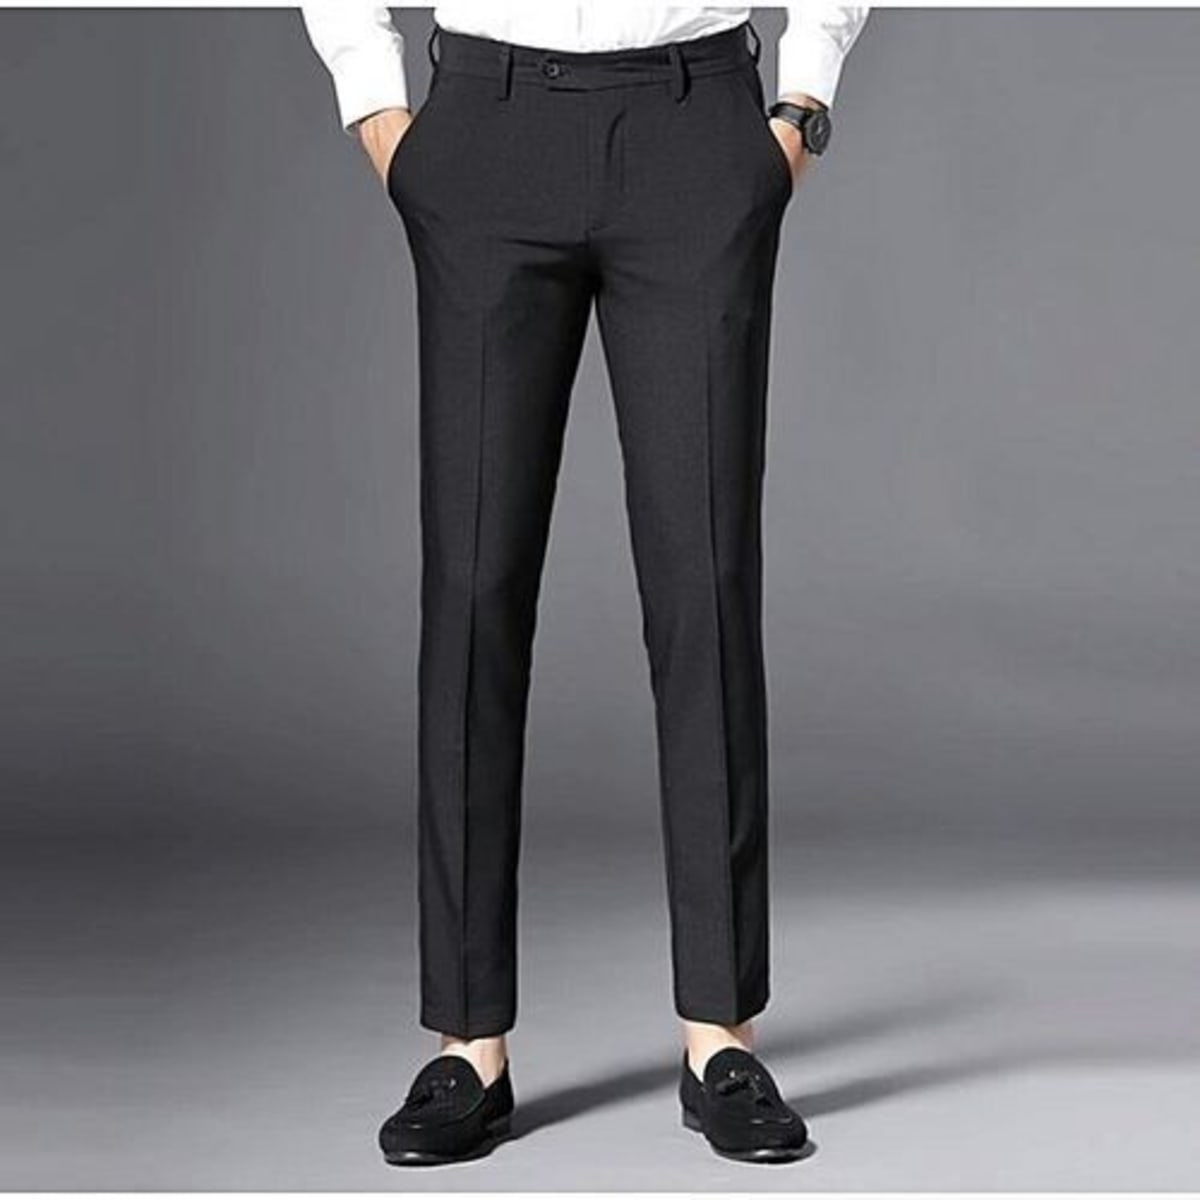 MANCREW Men's Slim Fit Formal Trousers - Black, Light Grey Combo (Pack Of 2)